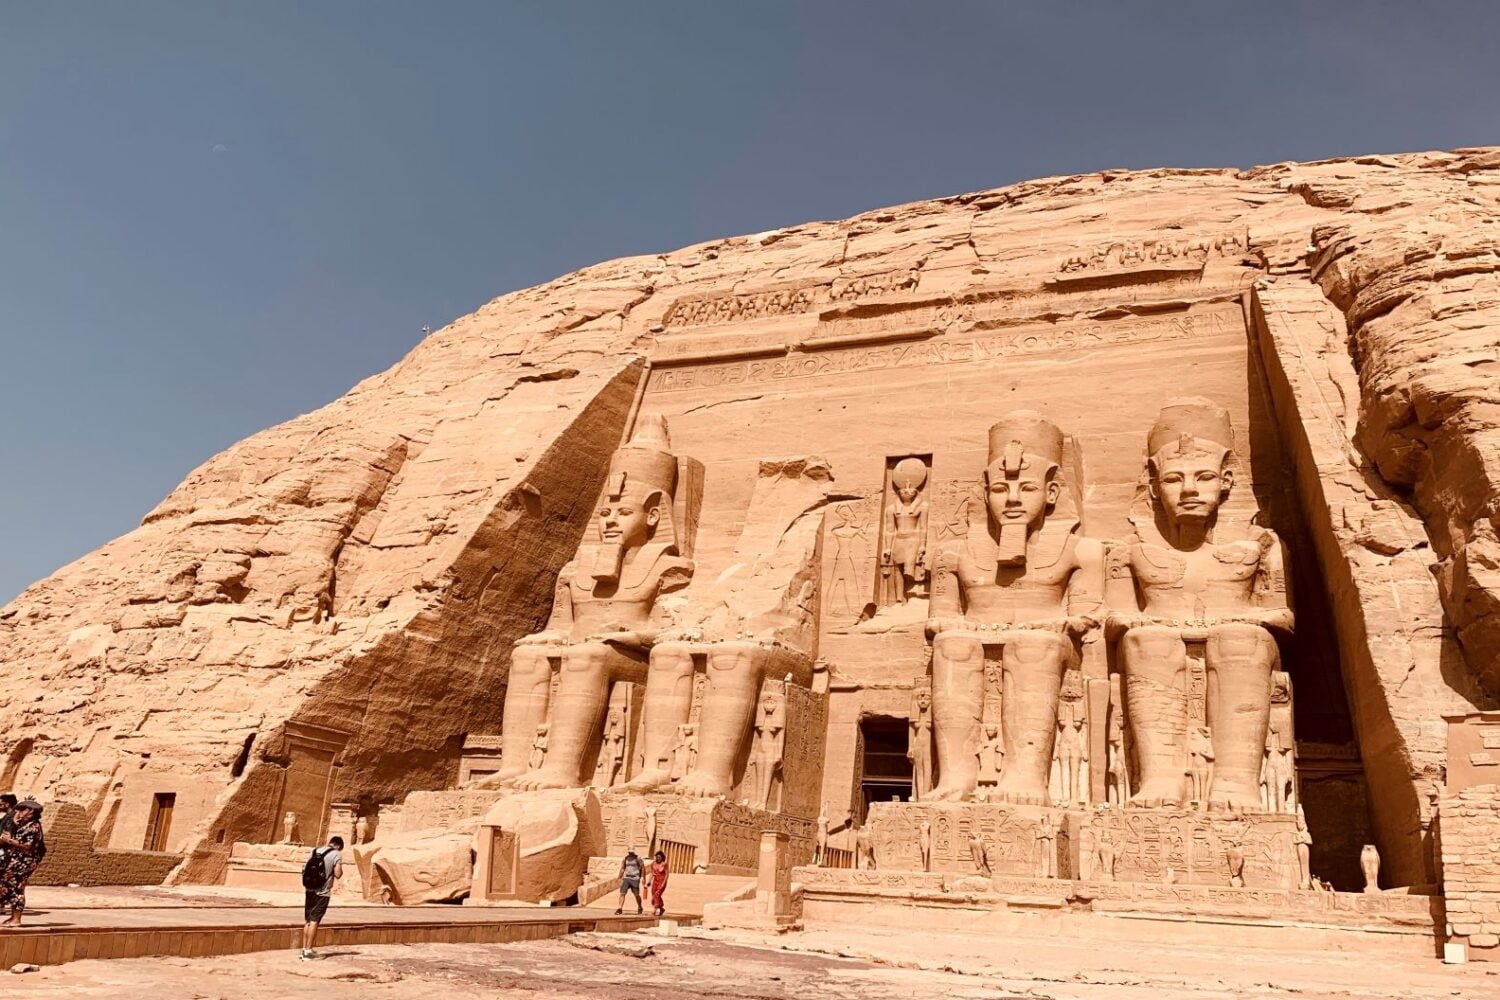 Egypt 4 Day Solo Tour To Cairo, Aswan & Abu Simbel From USA